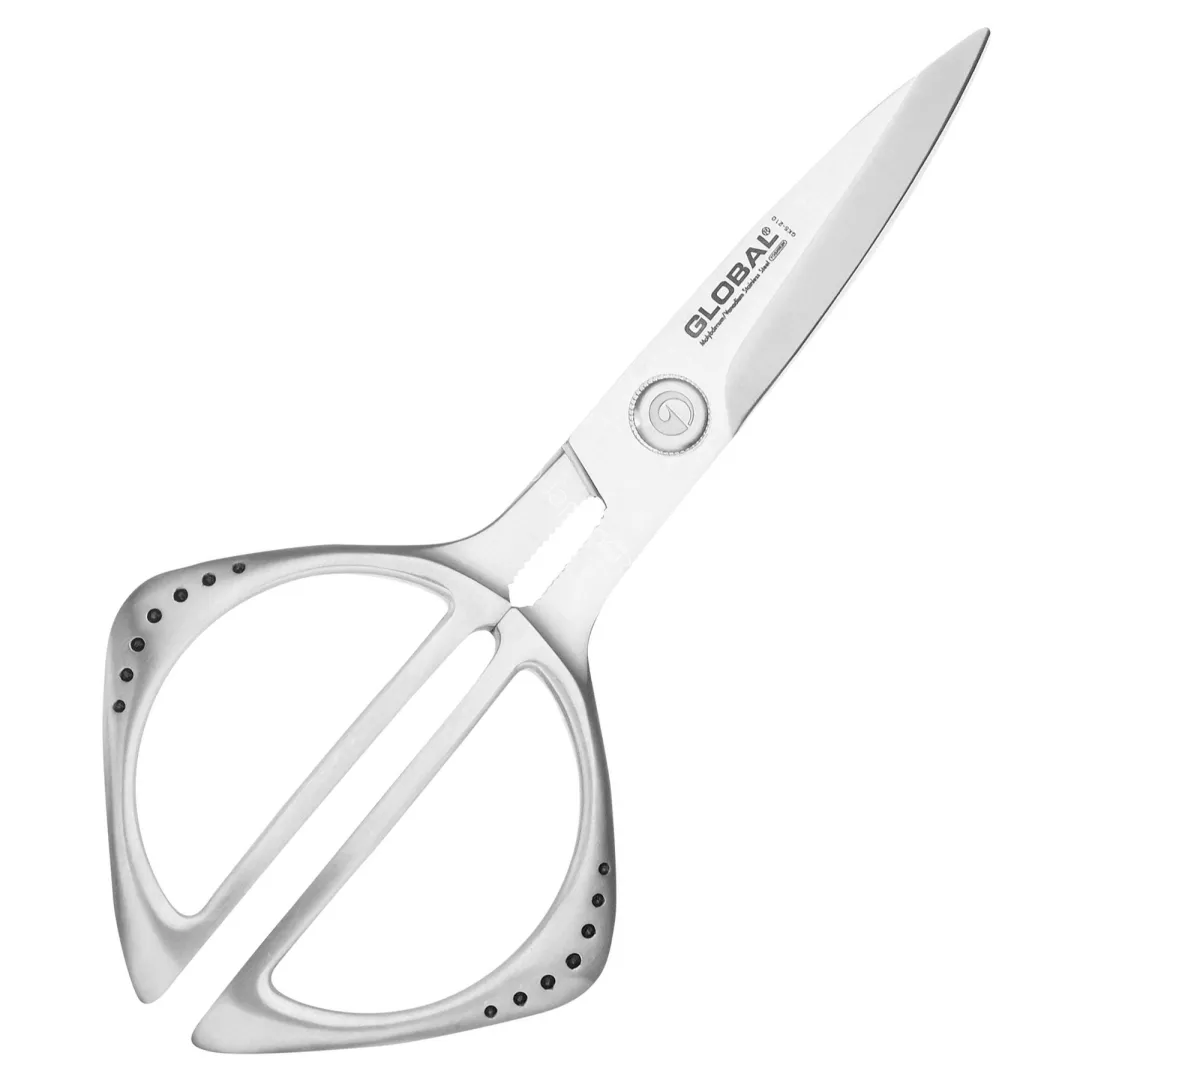 Nożyczki kuchenne 21cm | Global GKS-210